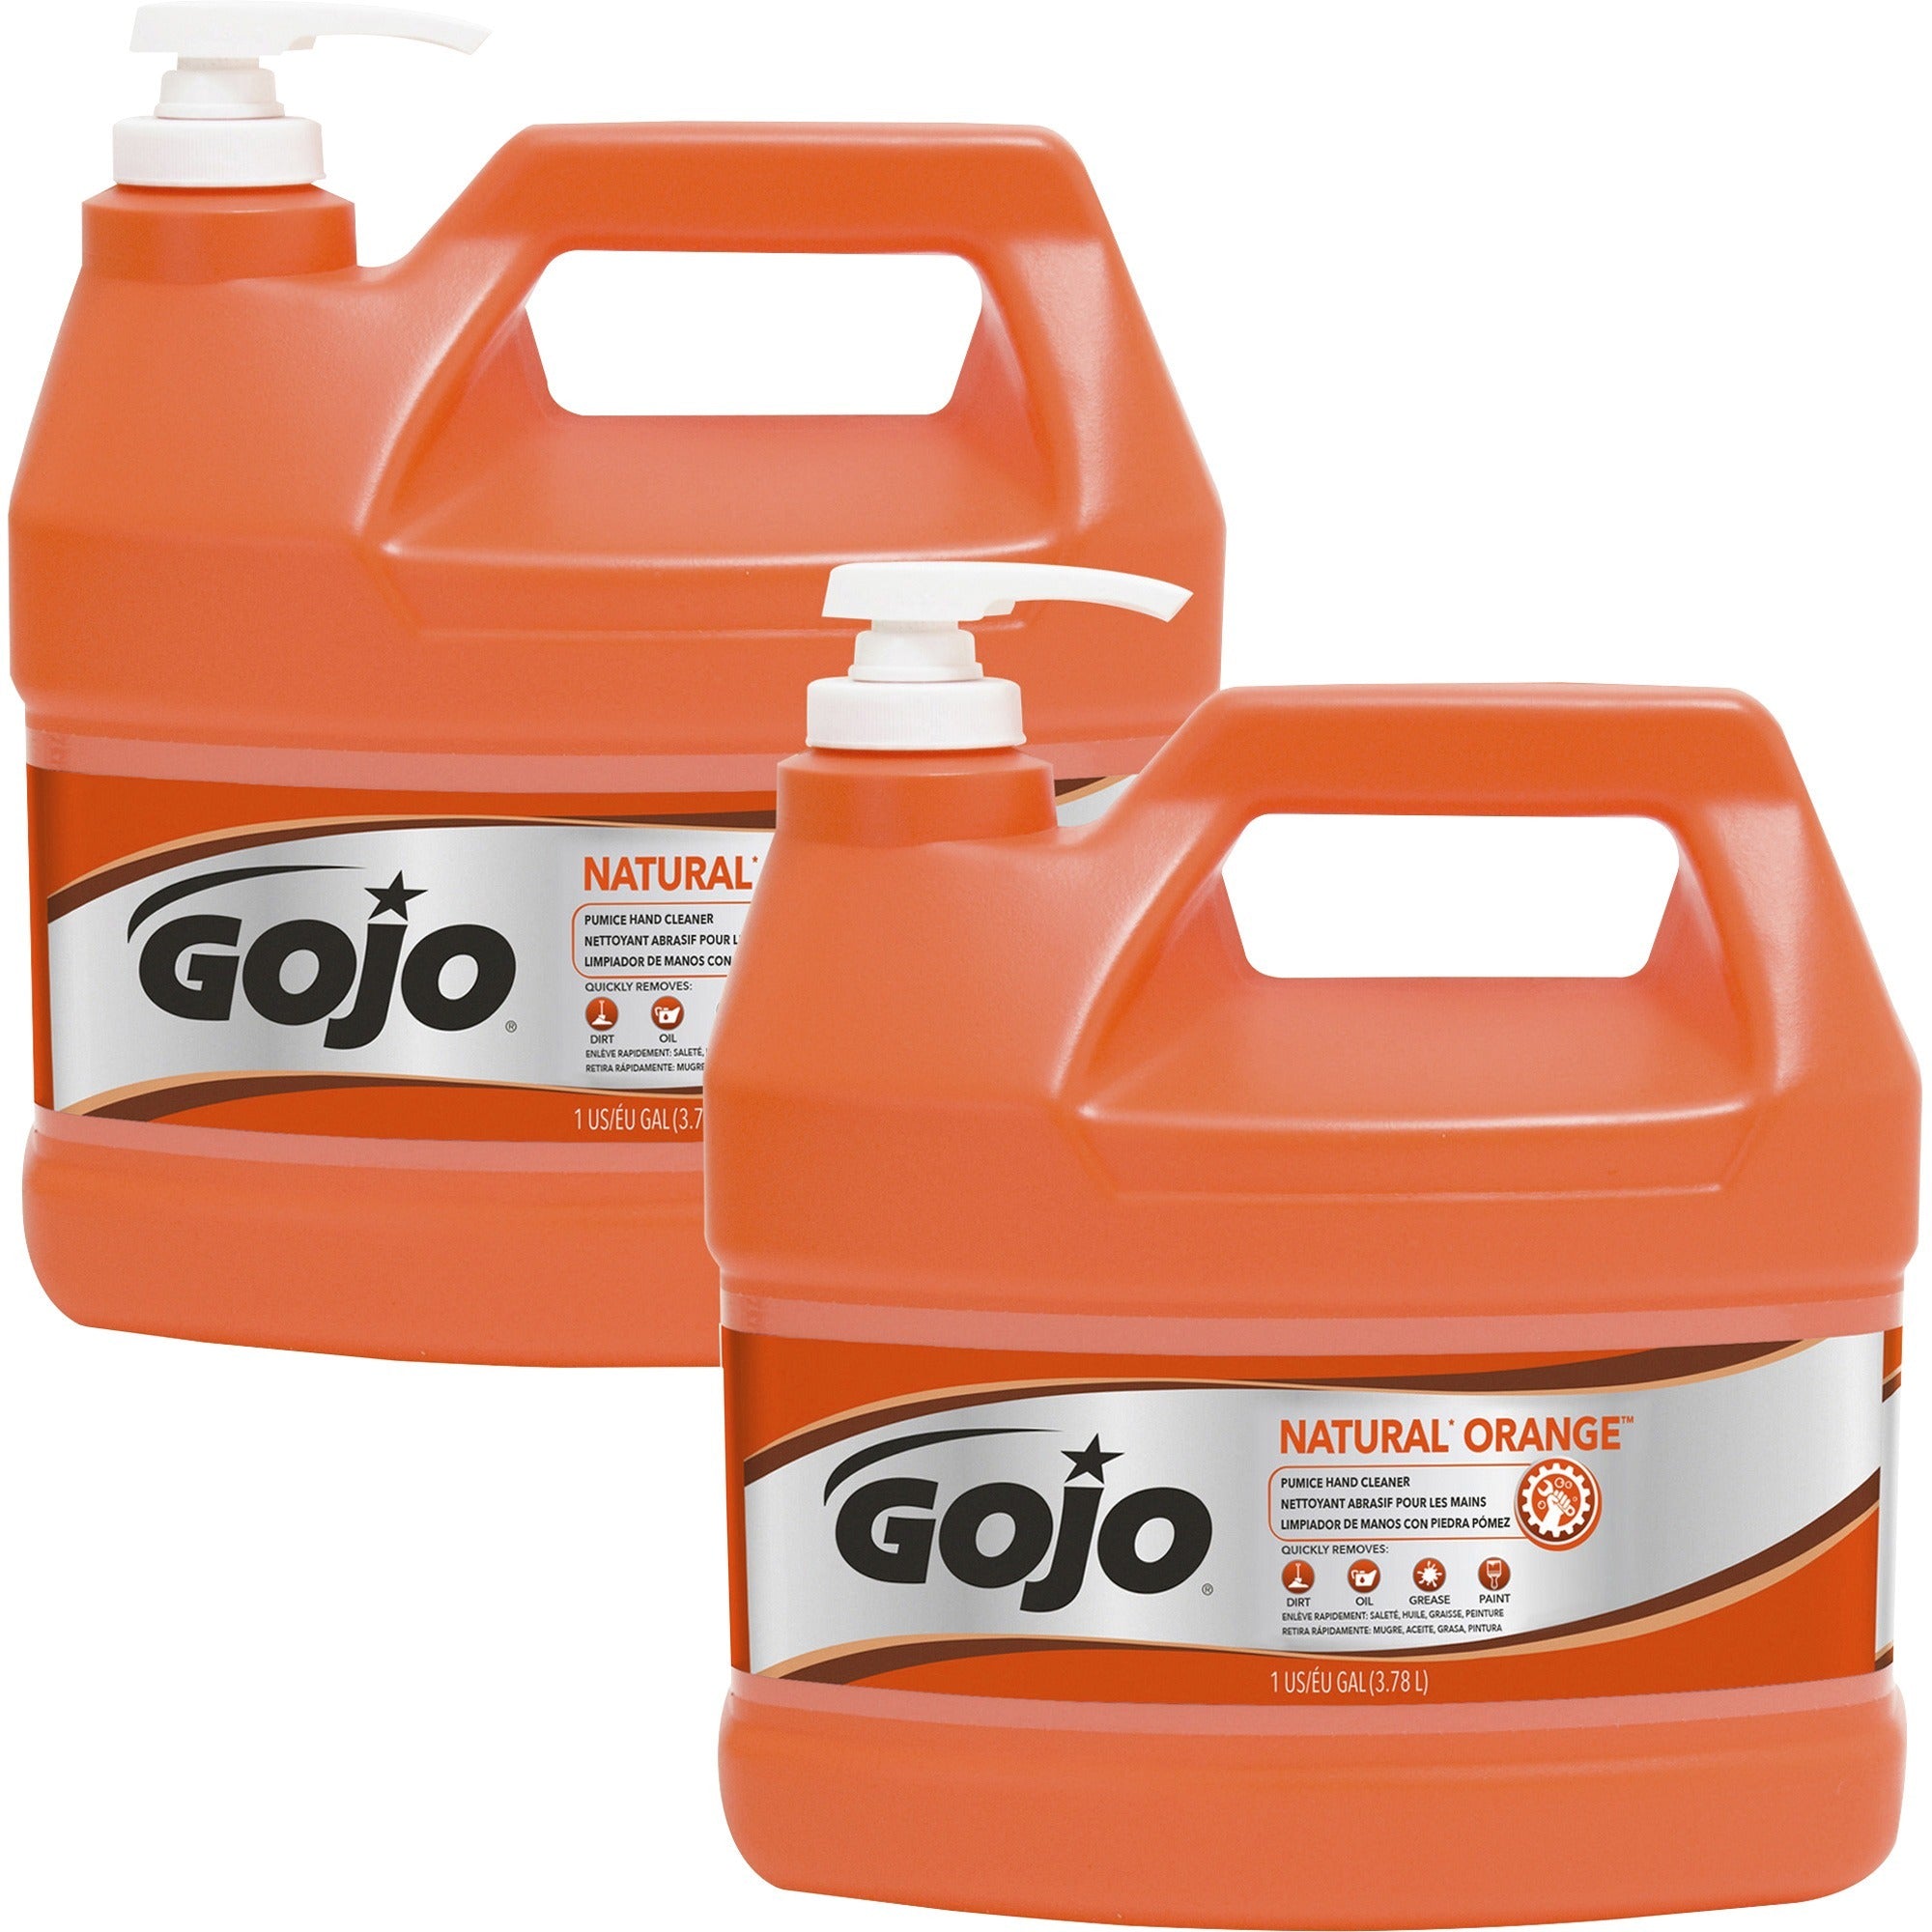 gojo-natural*-orange-pumice-hand-cleaner-orange-citrus-scentfor-1-gal-38-l-pump-bottle-dispenser-soil-remover-dirt-remover-grease-remover-oil-remover-hand-fast-acting-heavy-duty-2-carton_goj095502 - 1